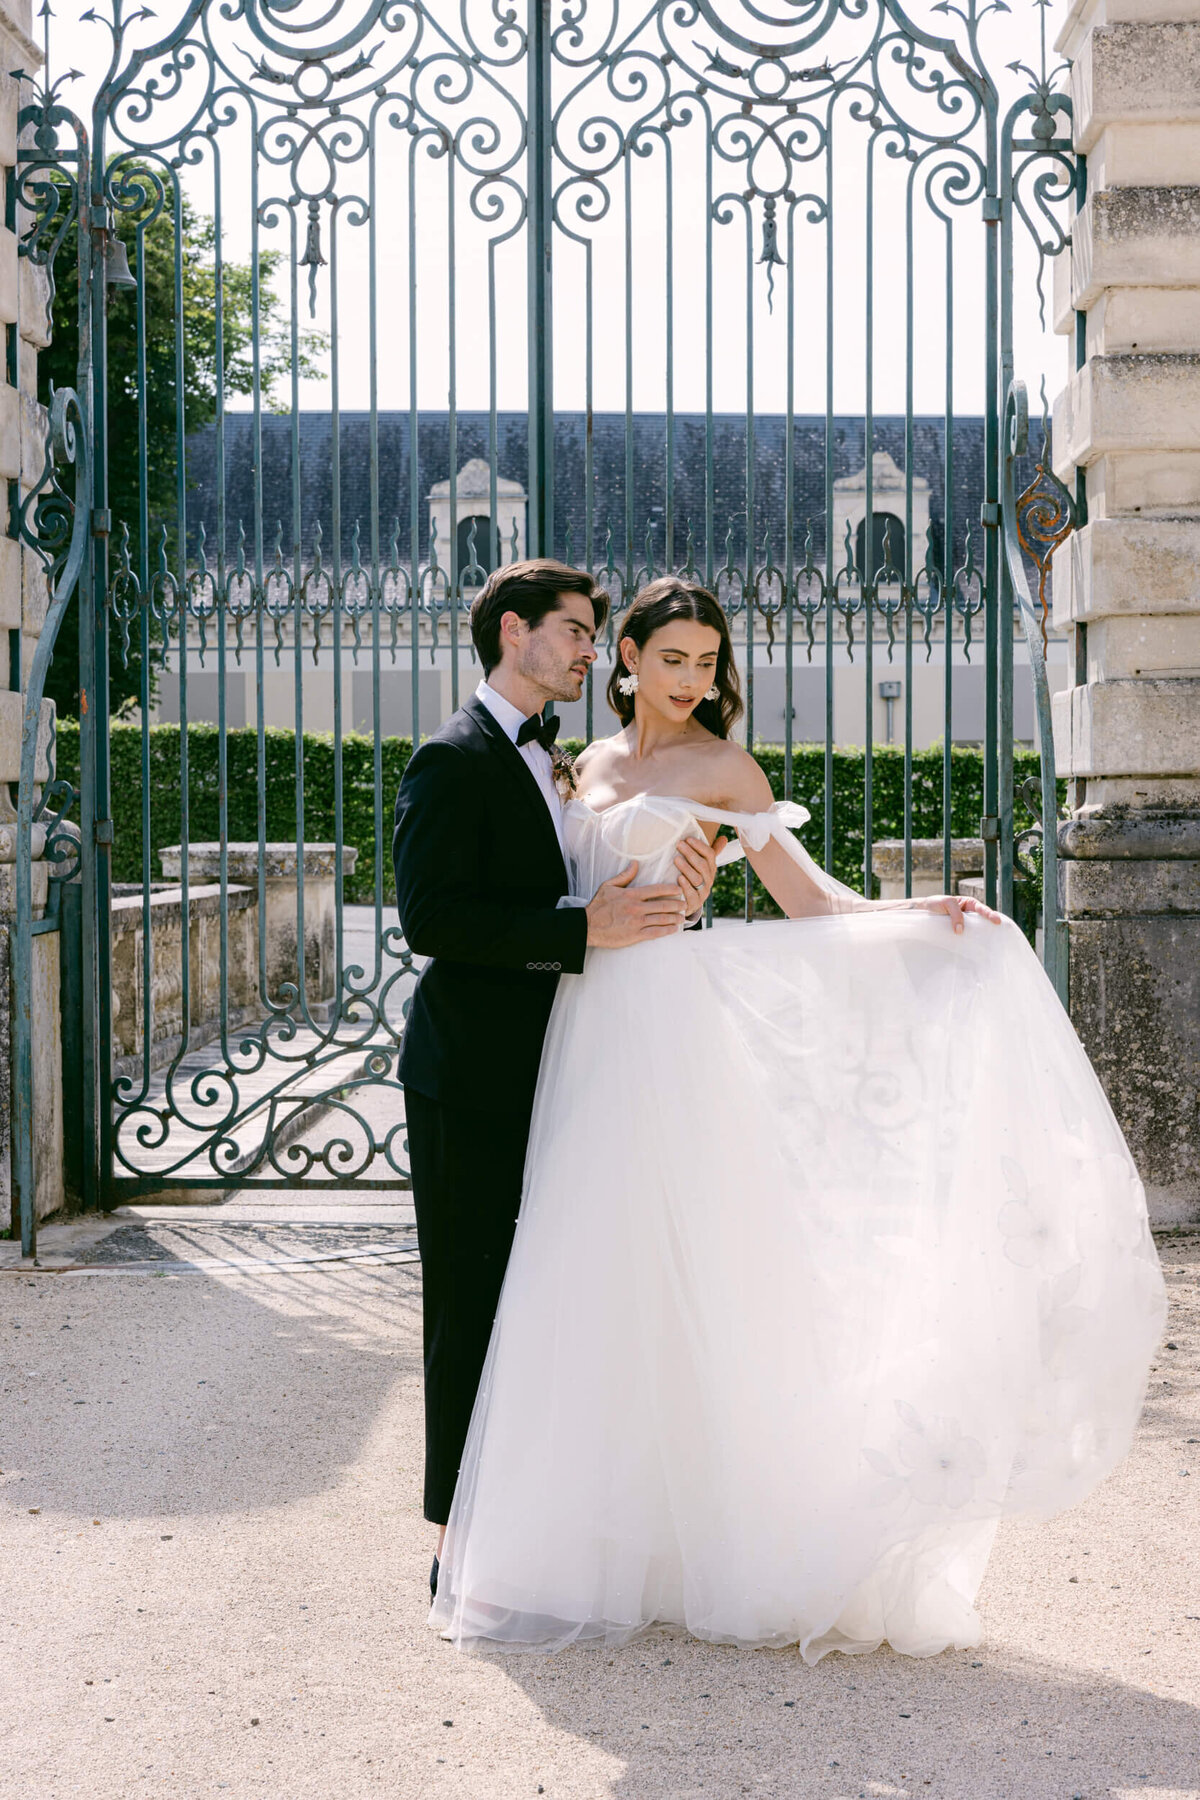 Jayce-Keil-Photo-Film-london-paris-ireland-wedding-photography-77